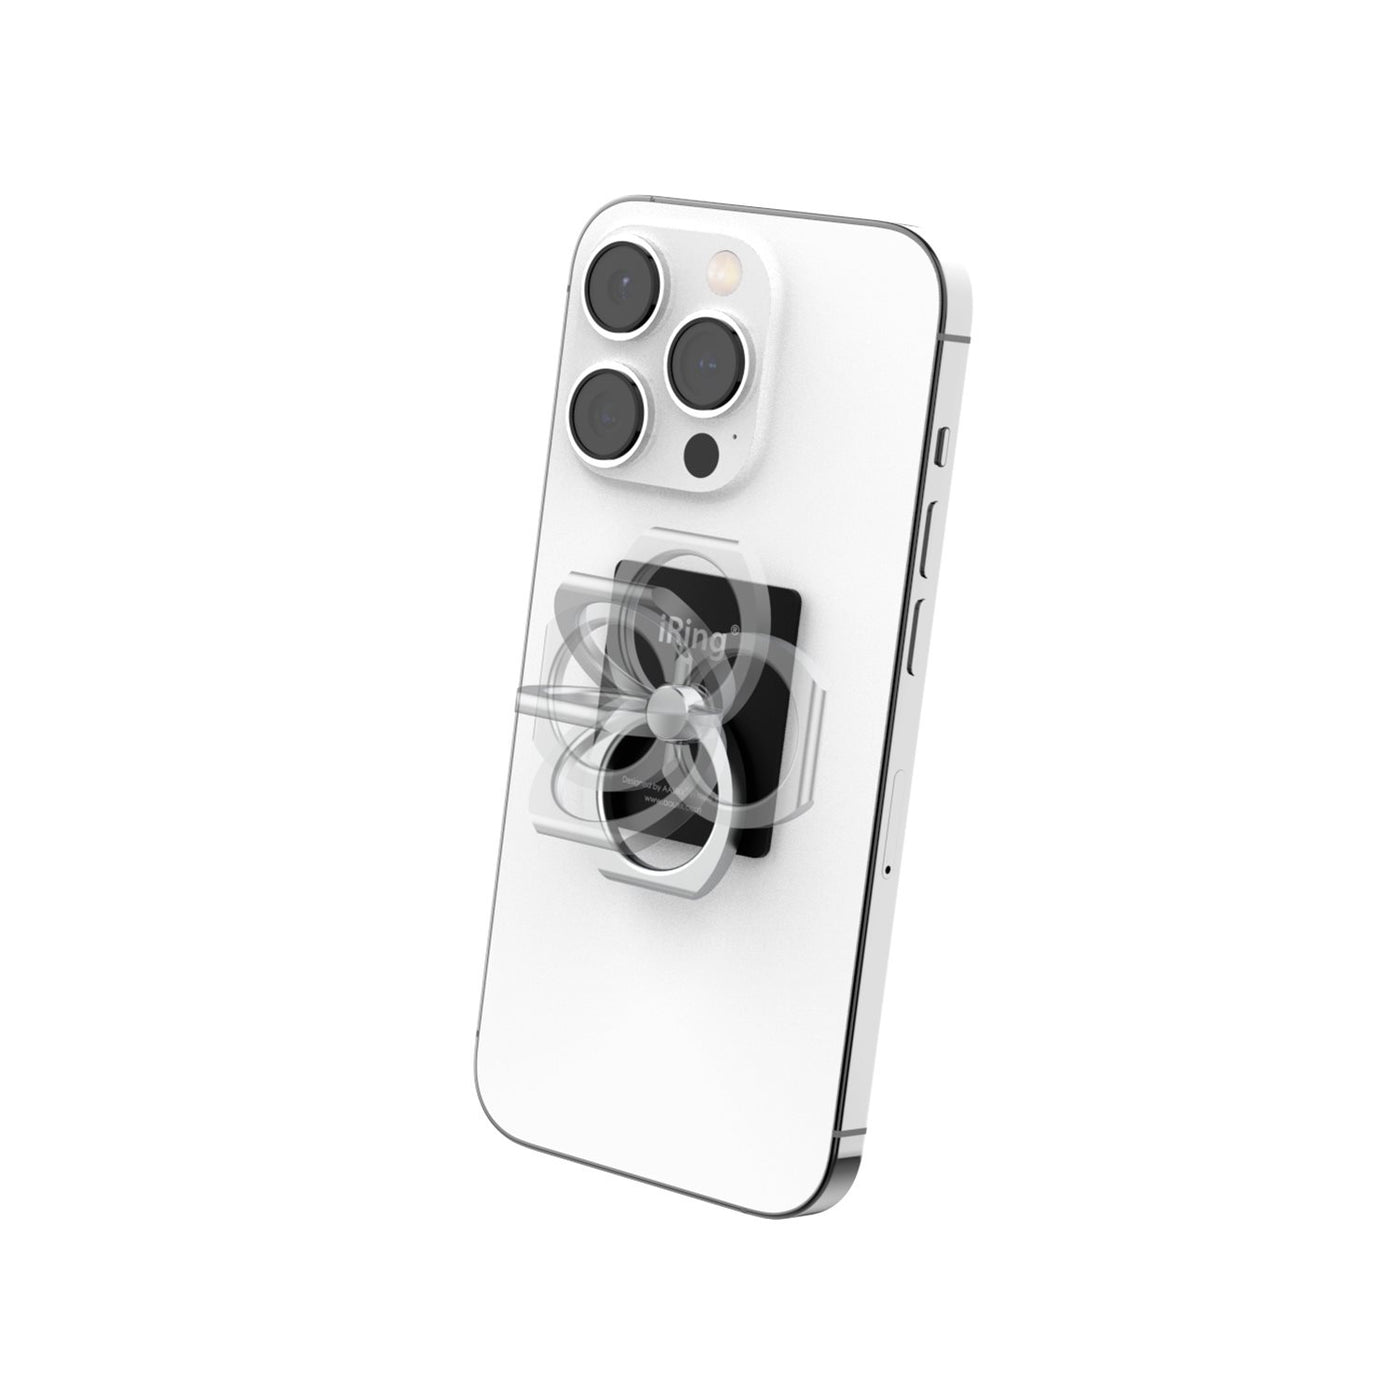 iRing® Original - Phone Grip & Stand - Reusable Adhesive - 360 Degree Rotation - 180 Degree Tilt Function - Matte Black